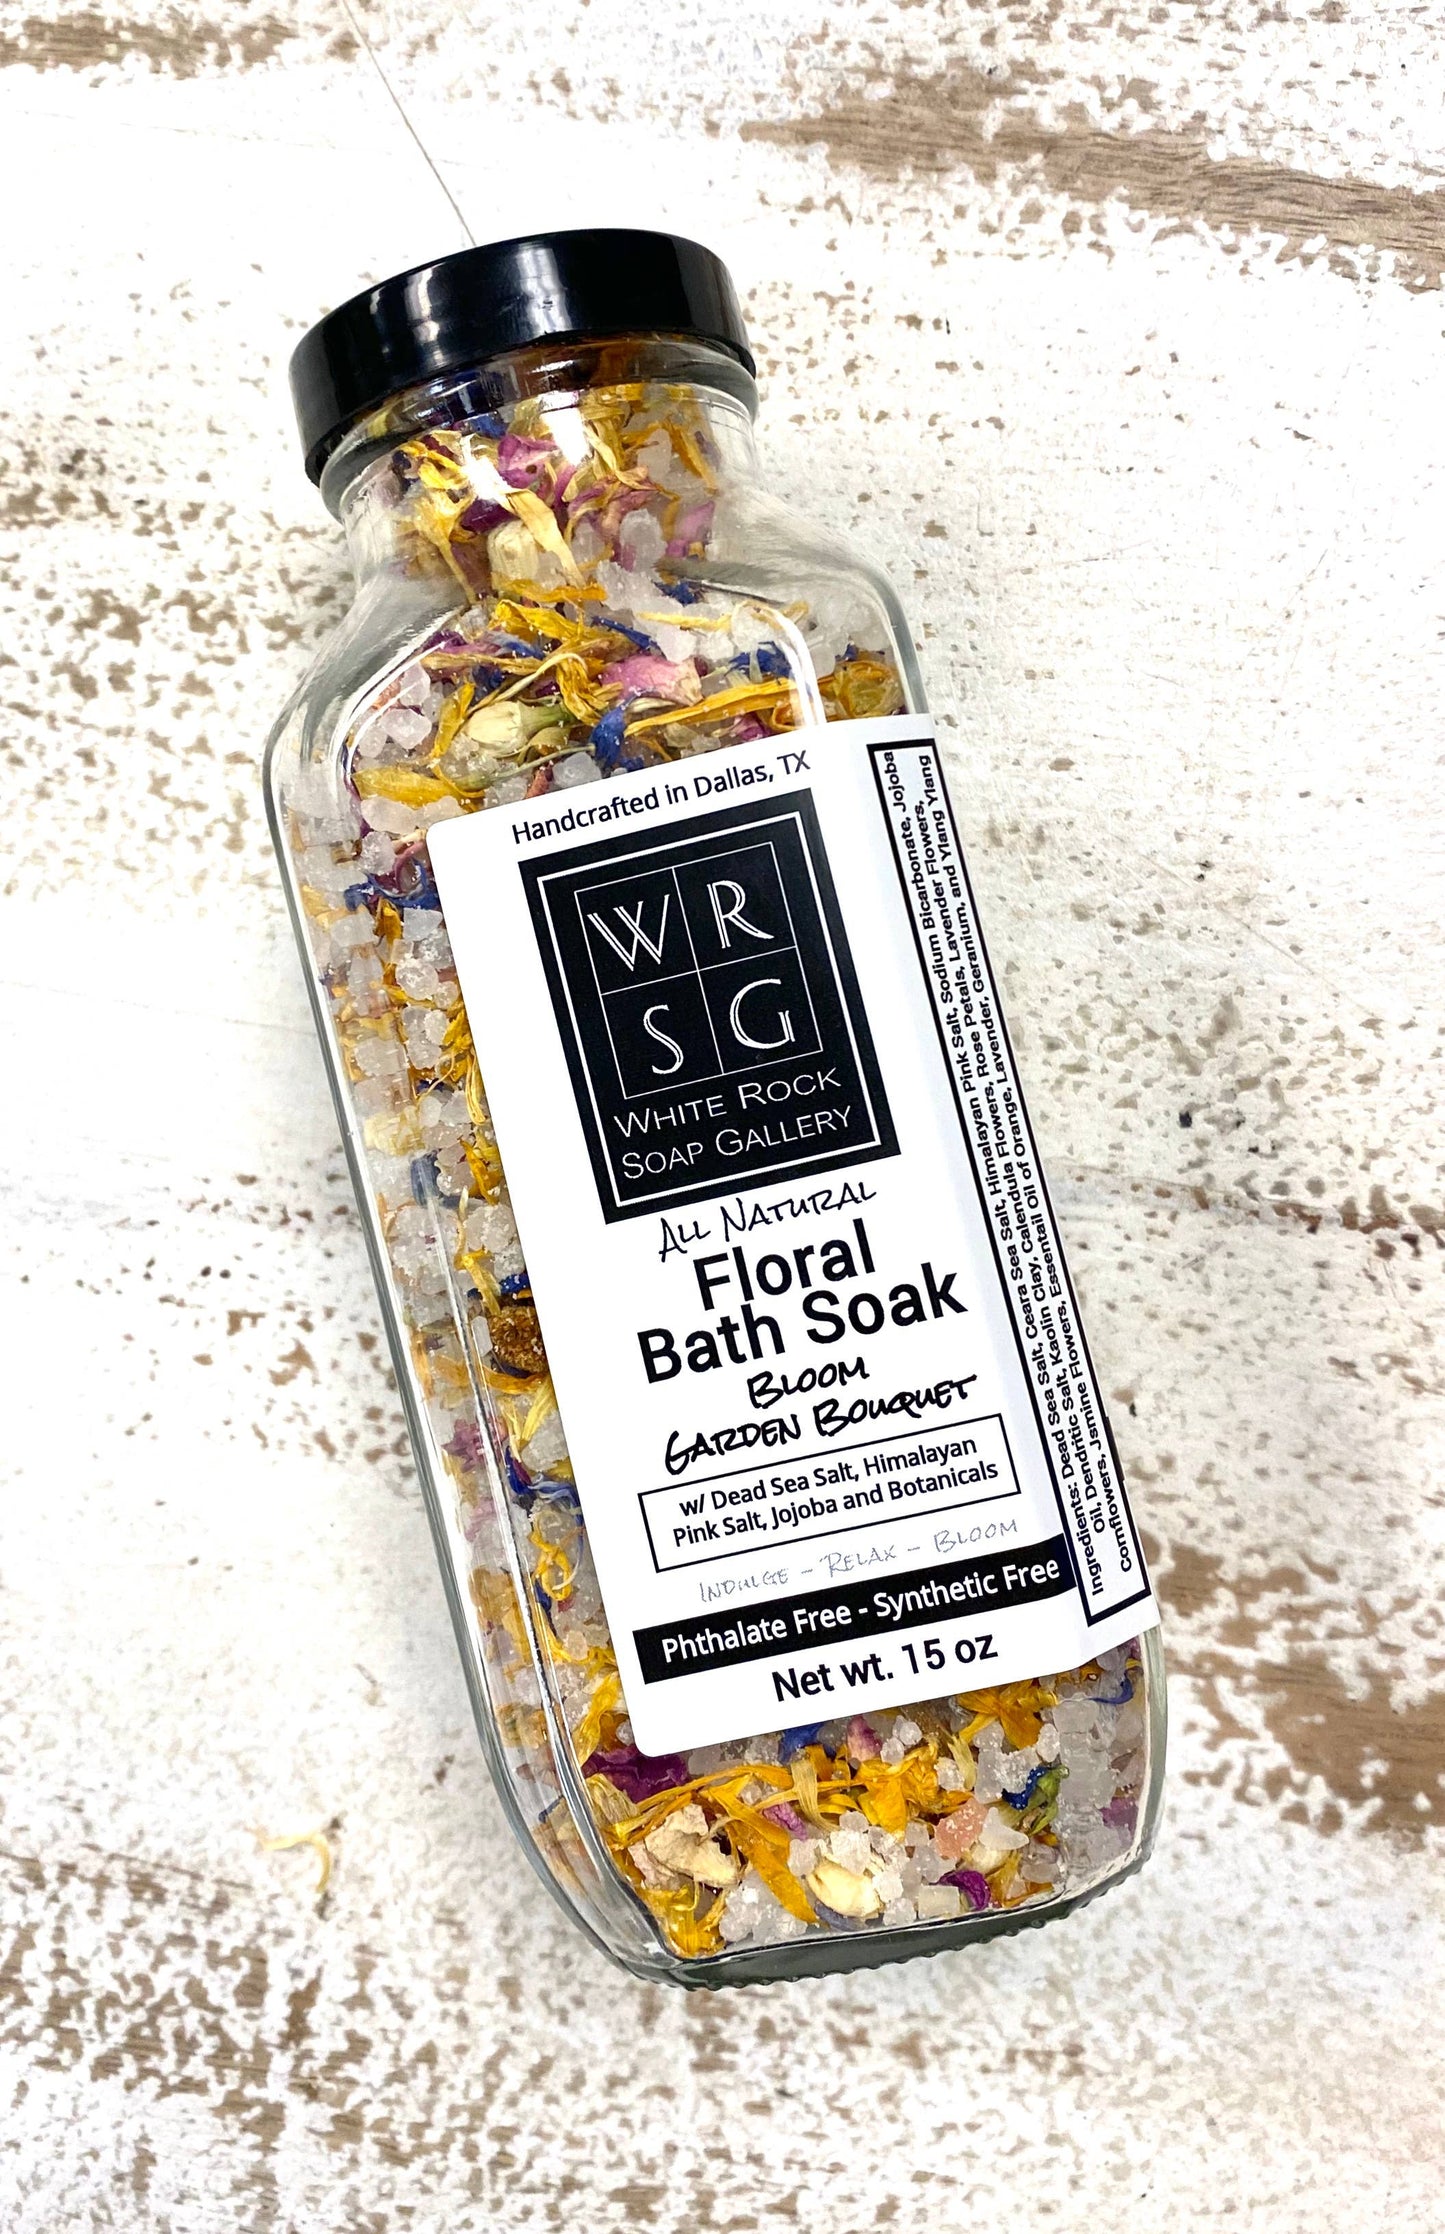 White Rock Soap Gallery - Floral Bath Soak